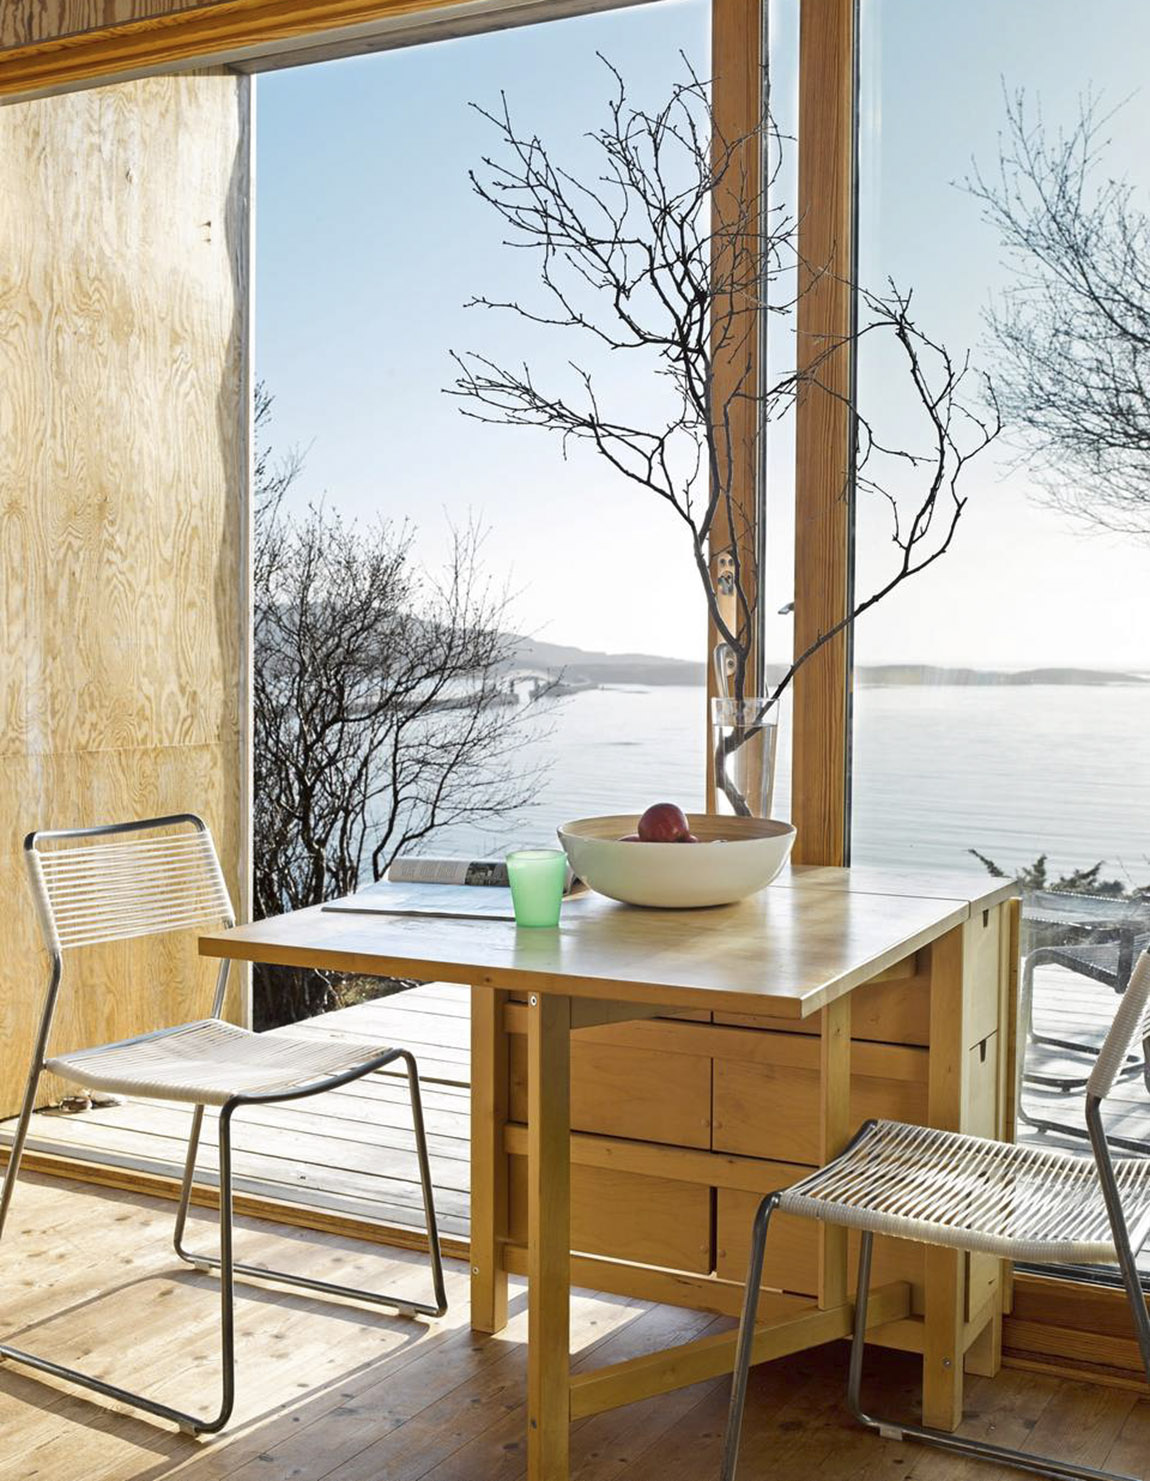 Stokkøya Strandhotell: A chic, eco-friendly summer by the sea